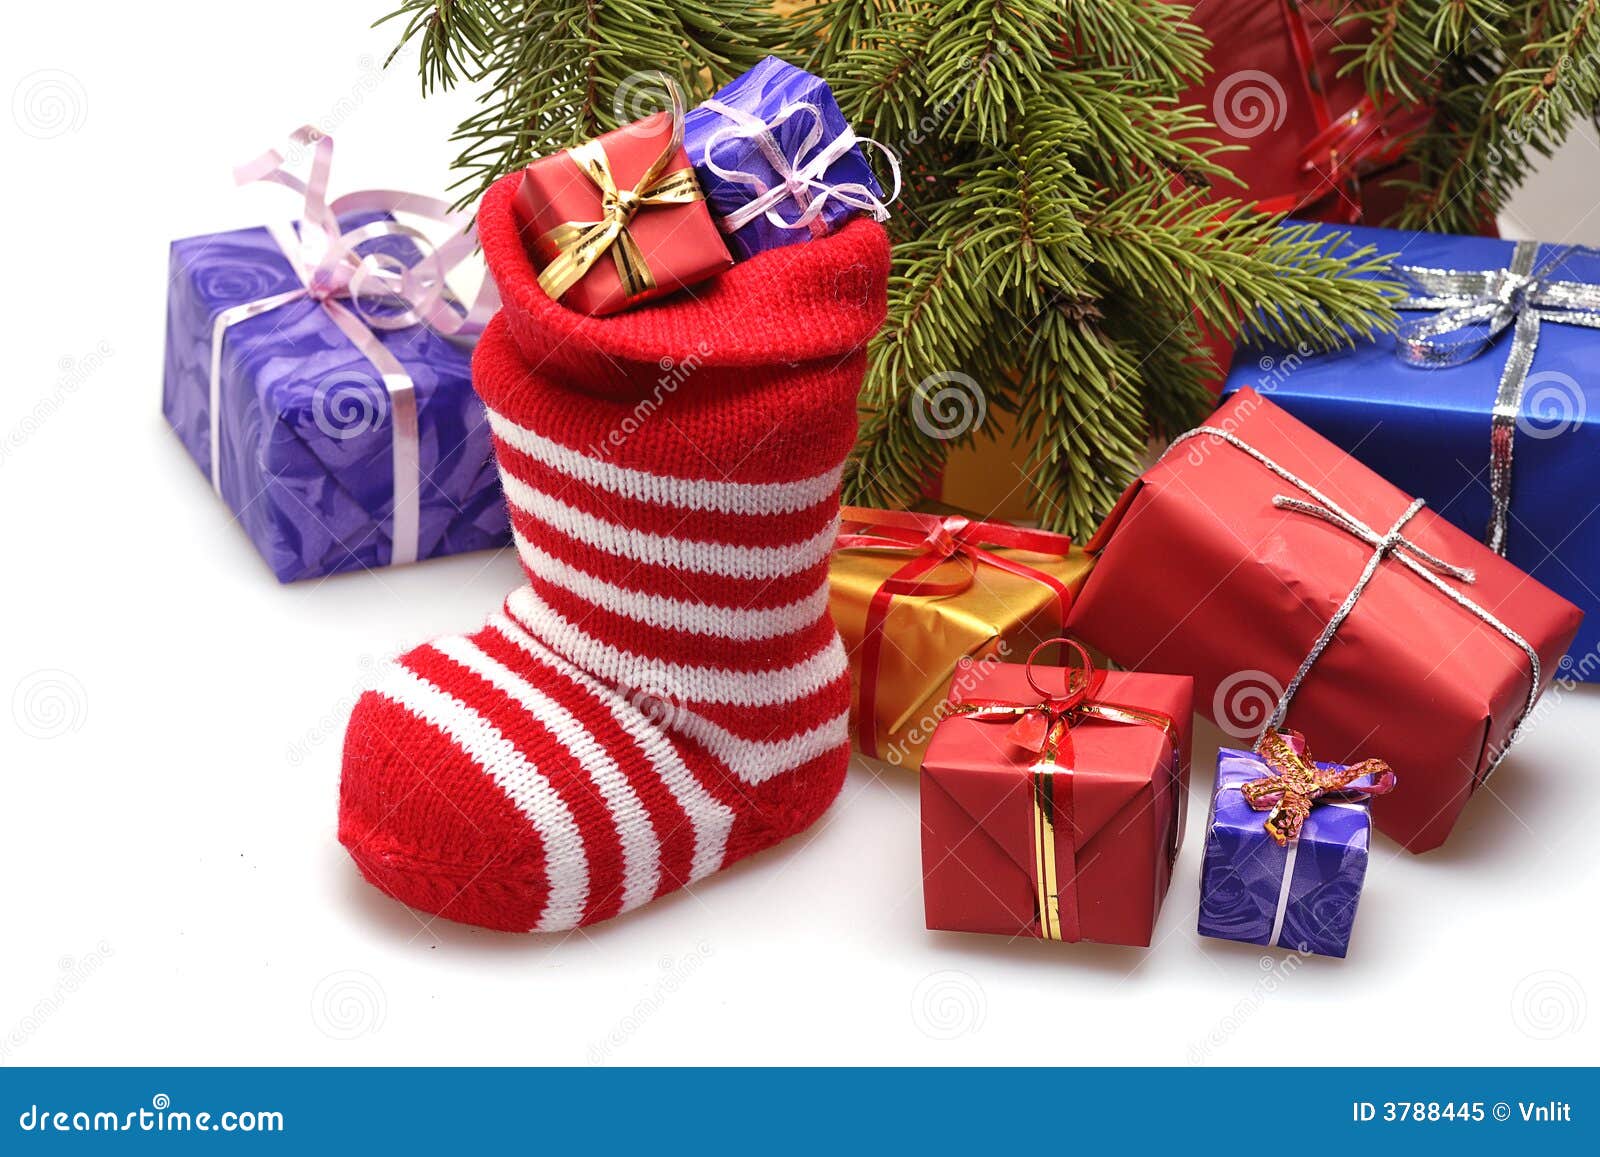 christmas stocking and presents